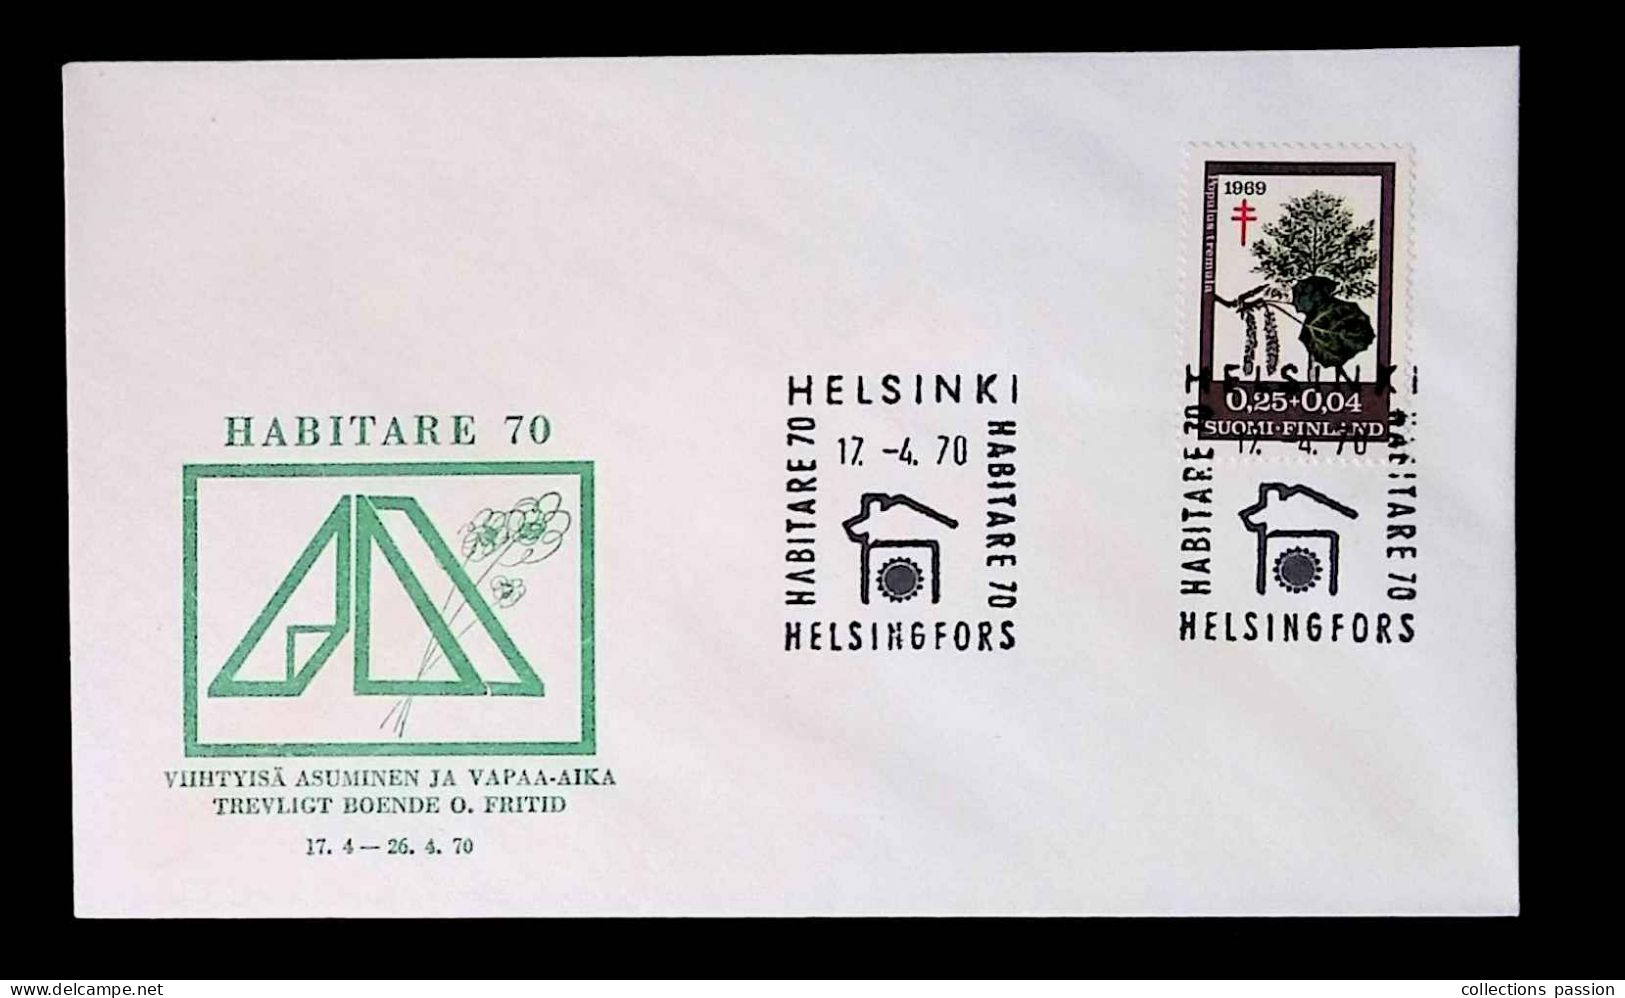 CL, Lettre, FDC, Suomi-Finland, Helsinki, 17-4-70, Habitare 70 - Covers & Documents